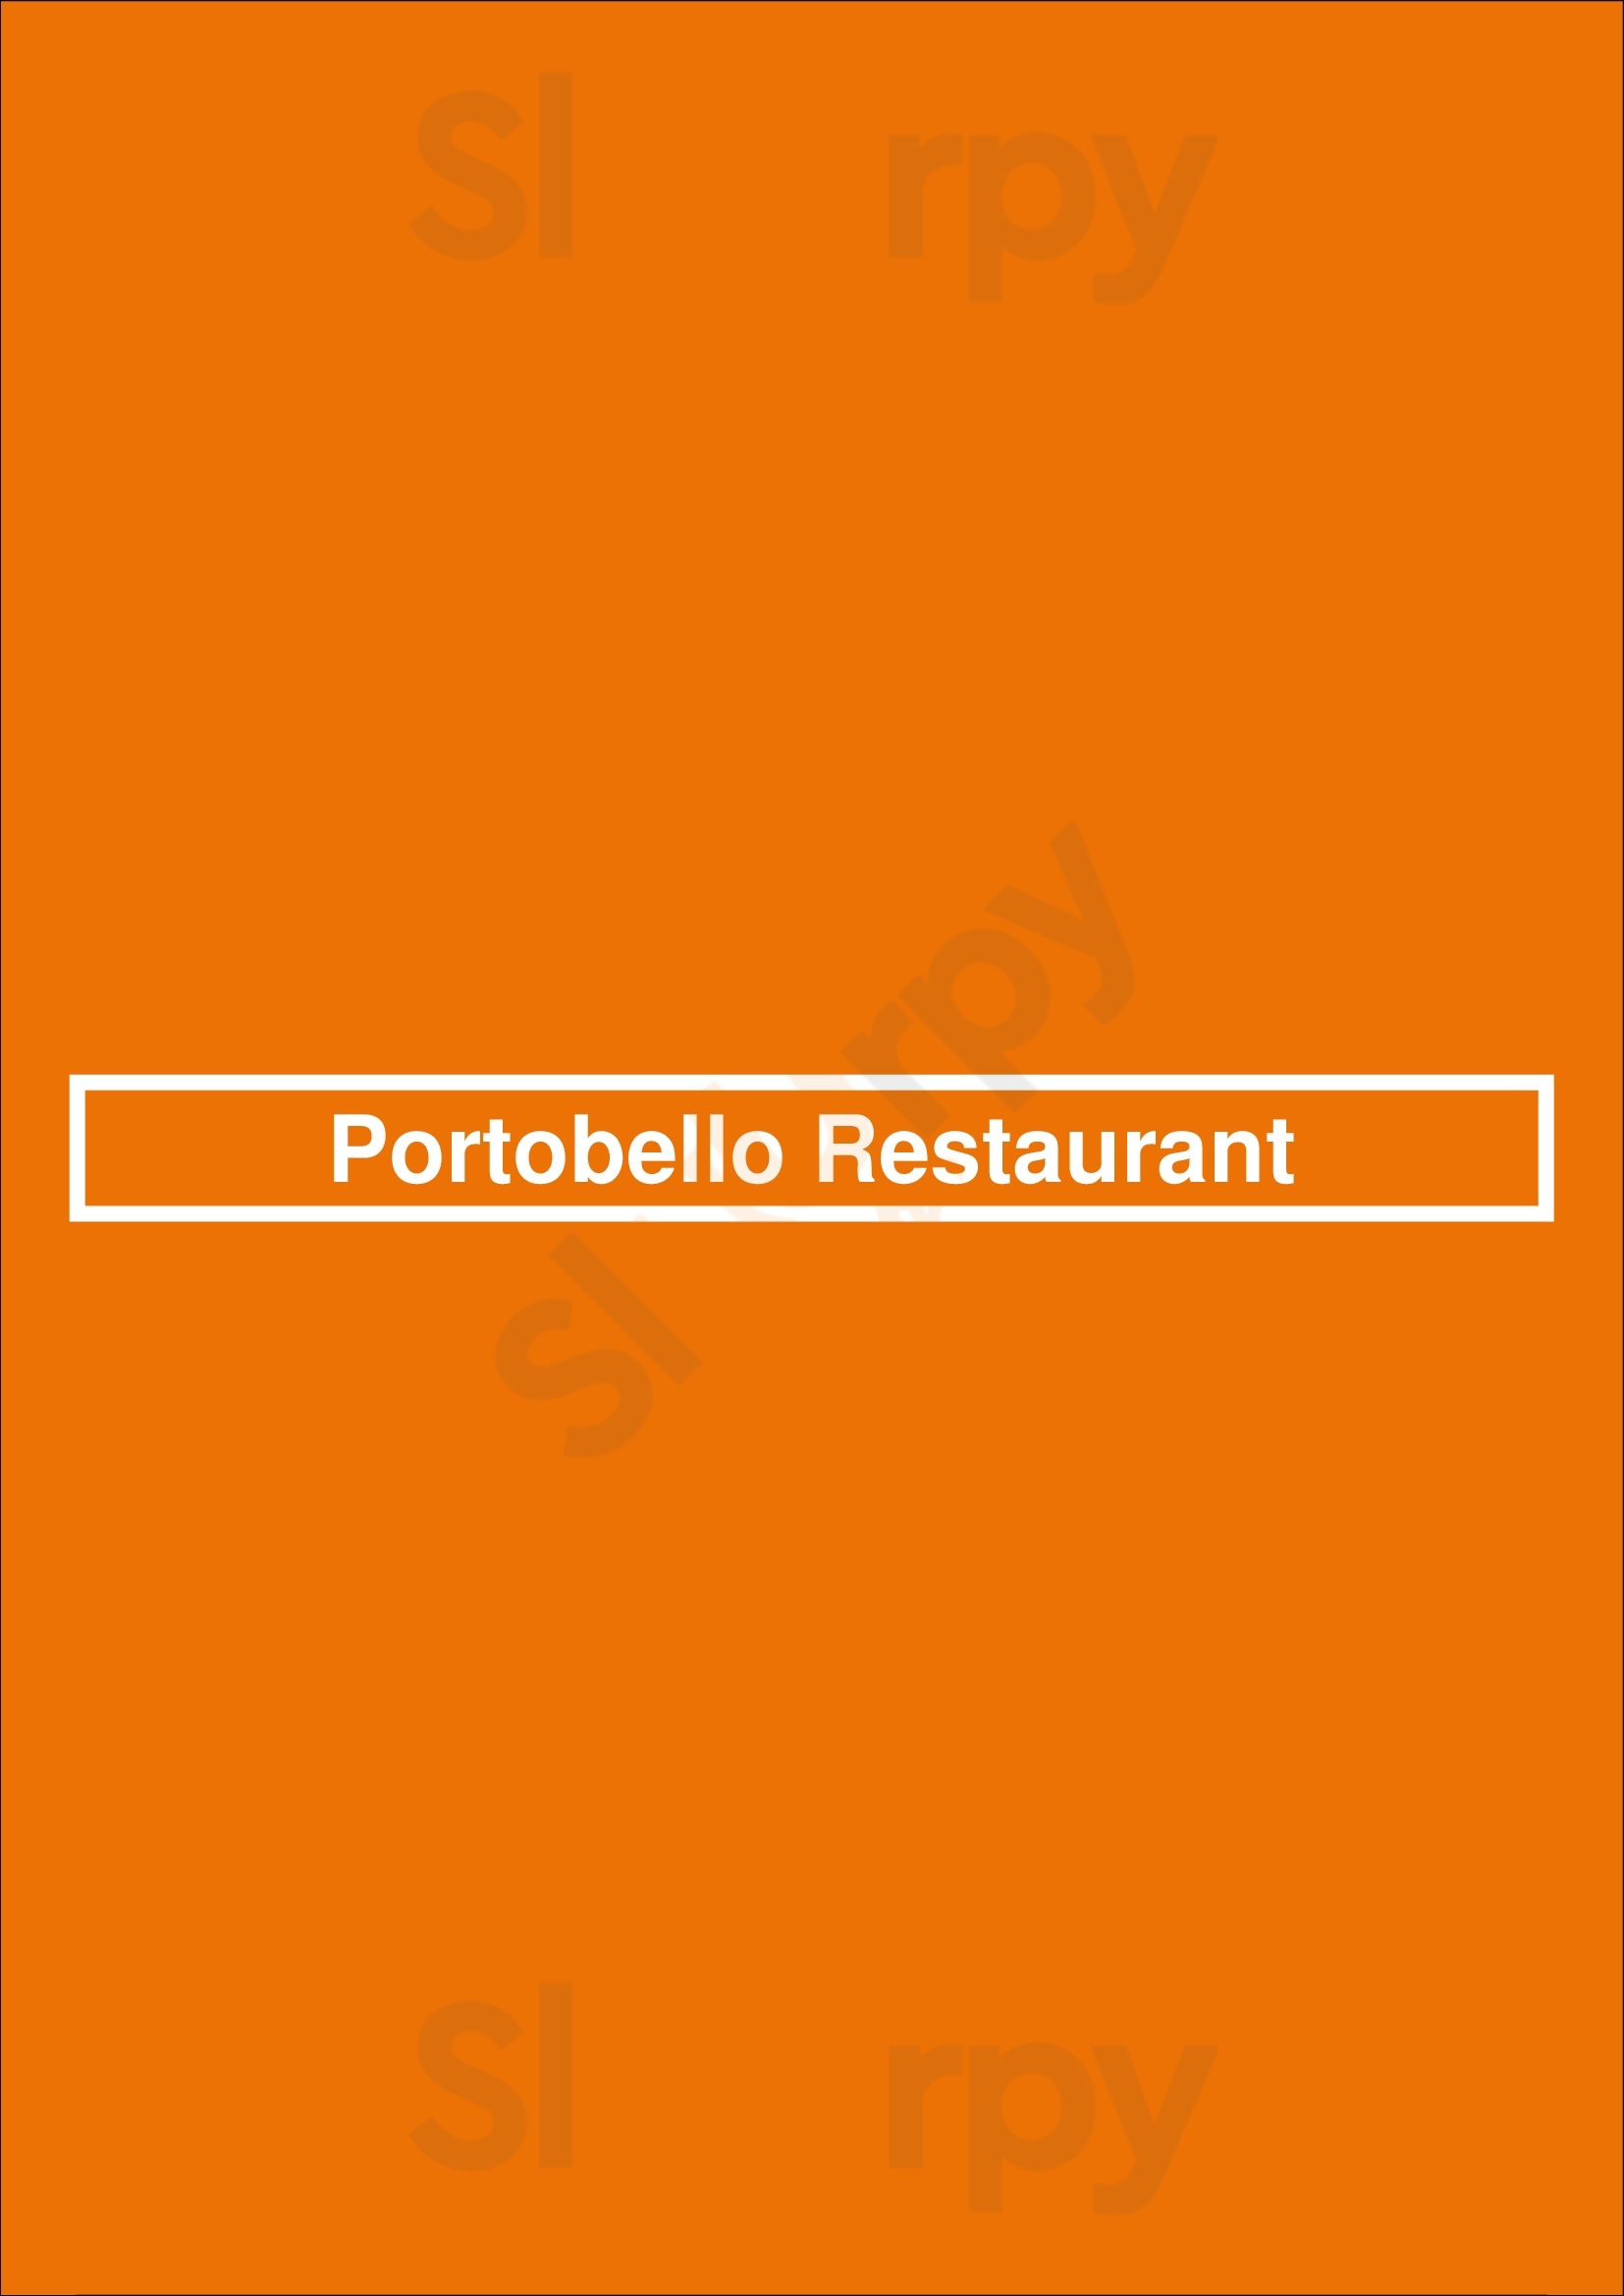 Portobello Restaurant Vancouver Menu - 1